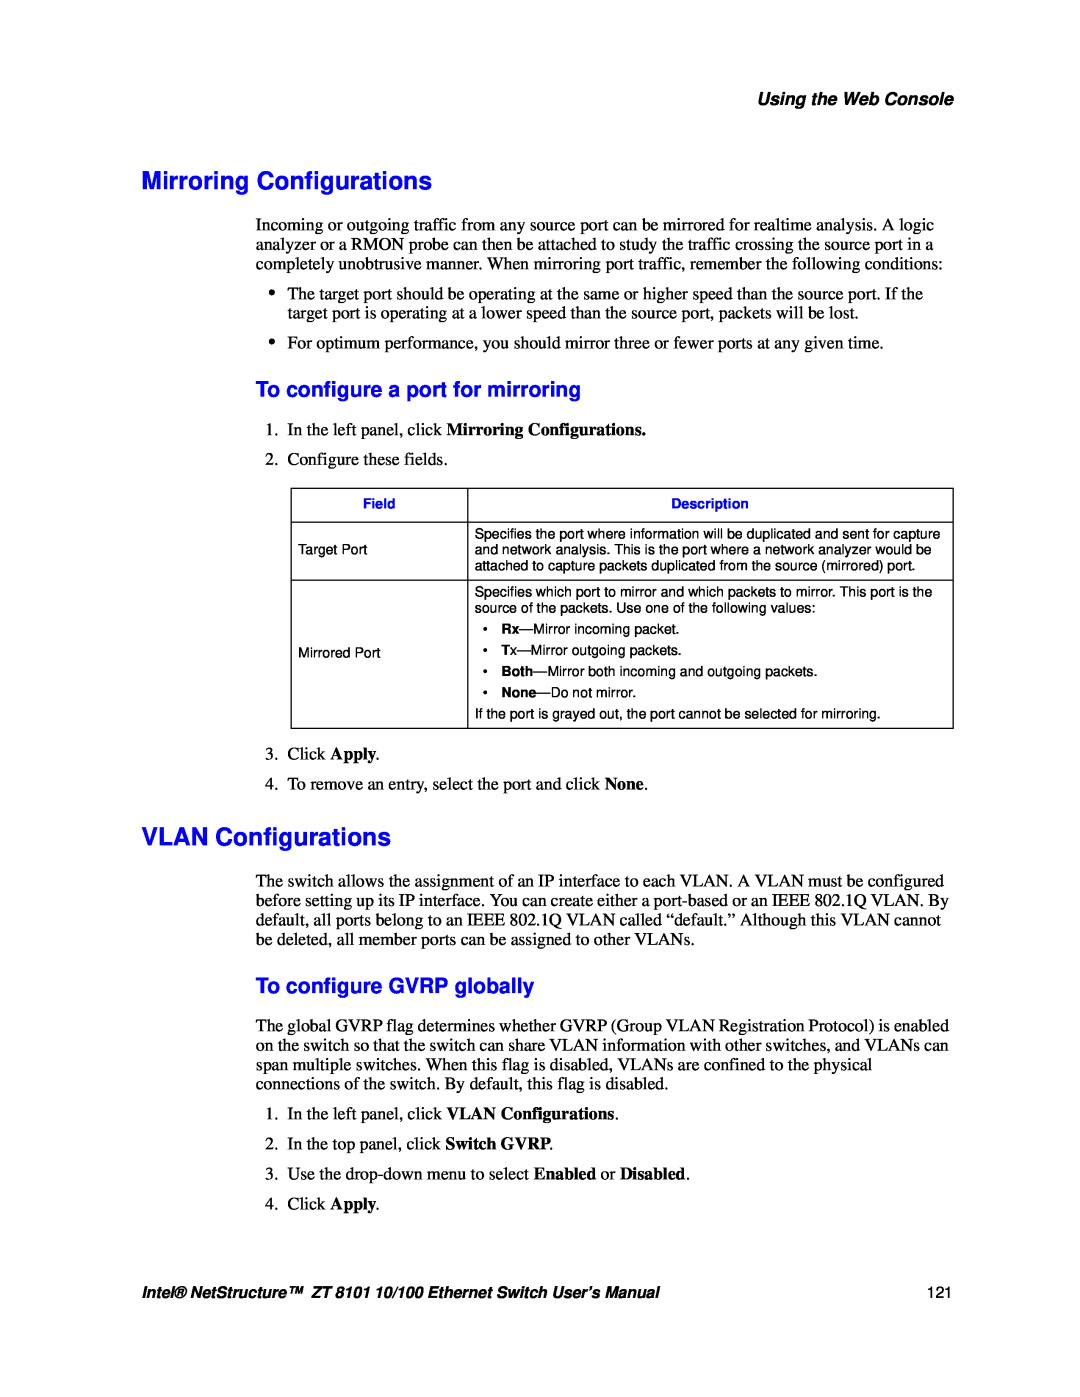 Intel ZT 8101 10/100 user manual VLAN Configurations, Mirroring Configurations, To configure a port for mirroring 